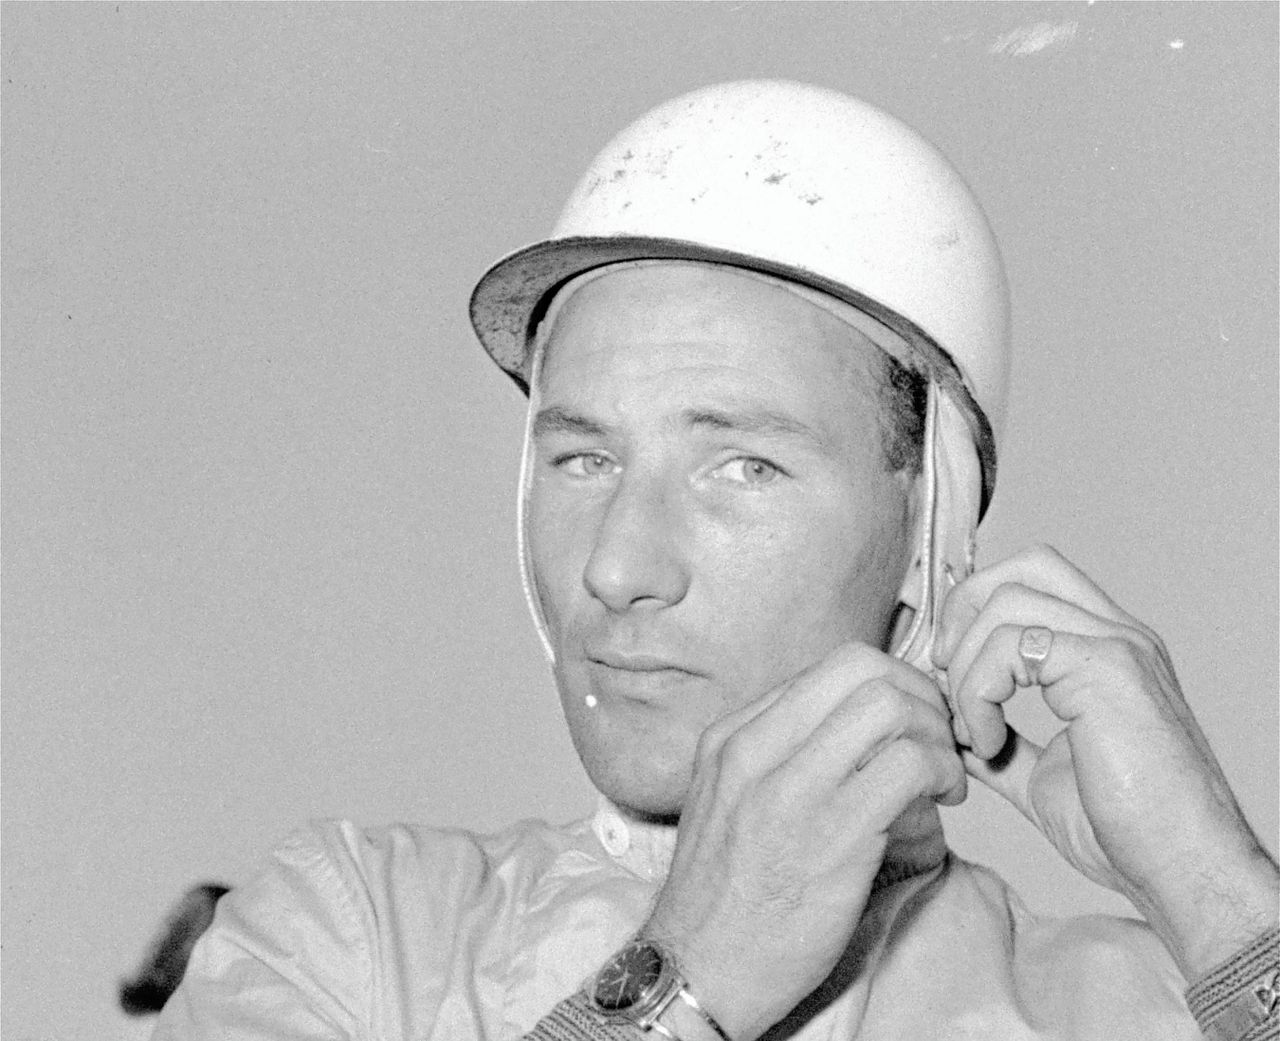 Stirling Moss bij de Amerikaanse Grand Prix in 1961 in Watkins Glen, New York.